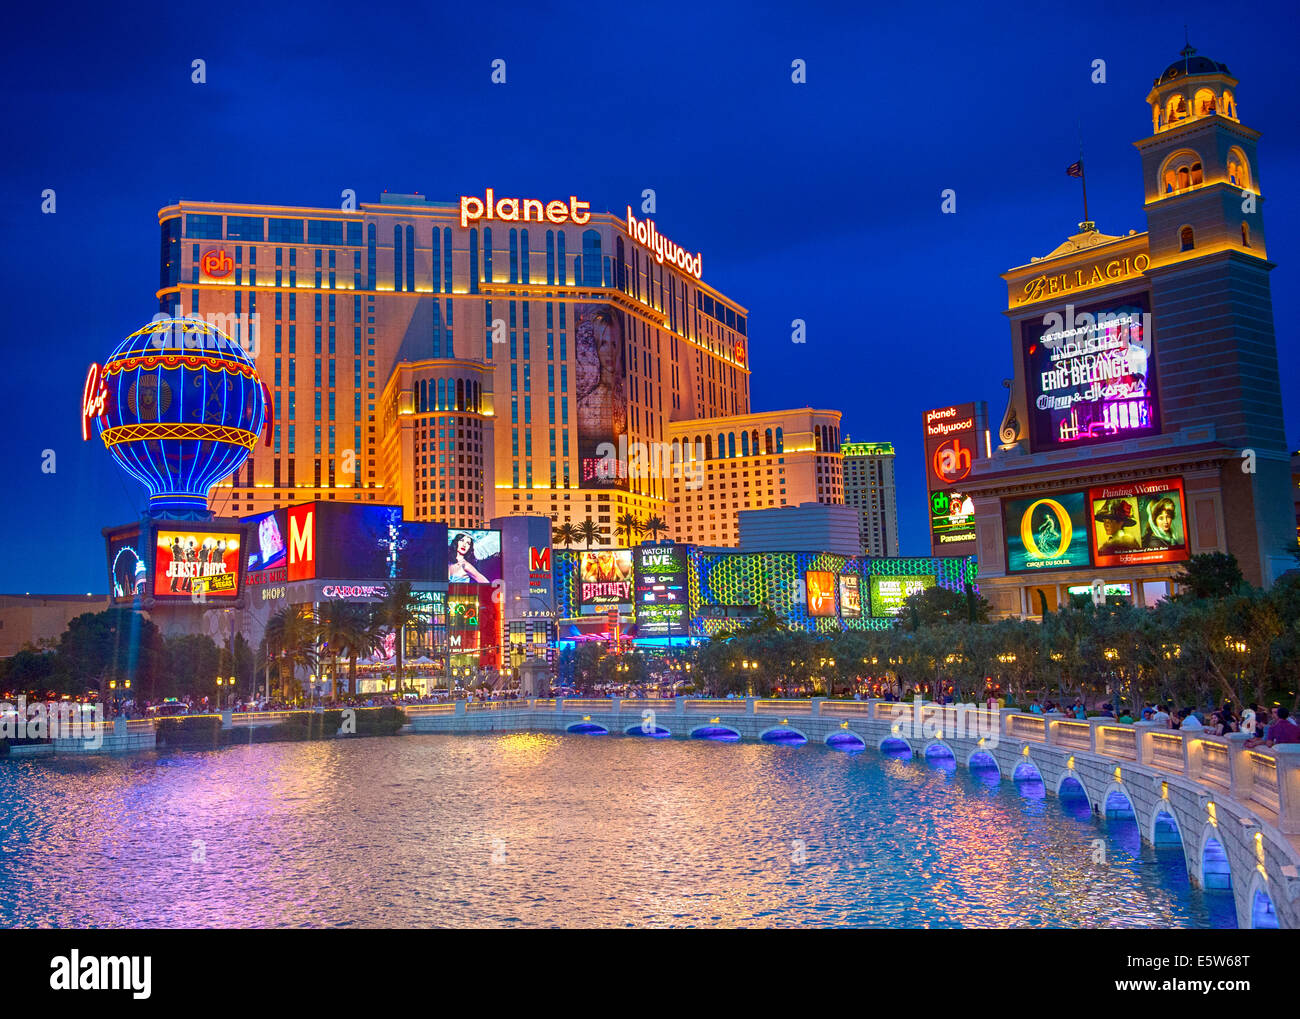 flare Porto Vulkan Planet Hollywood hotel and Casino in Las Vegas Stock Photo - Alamy